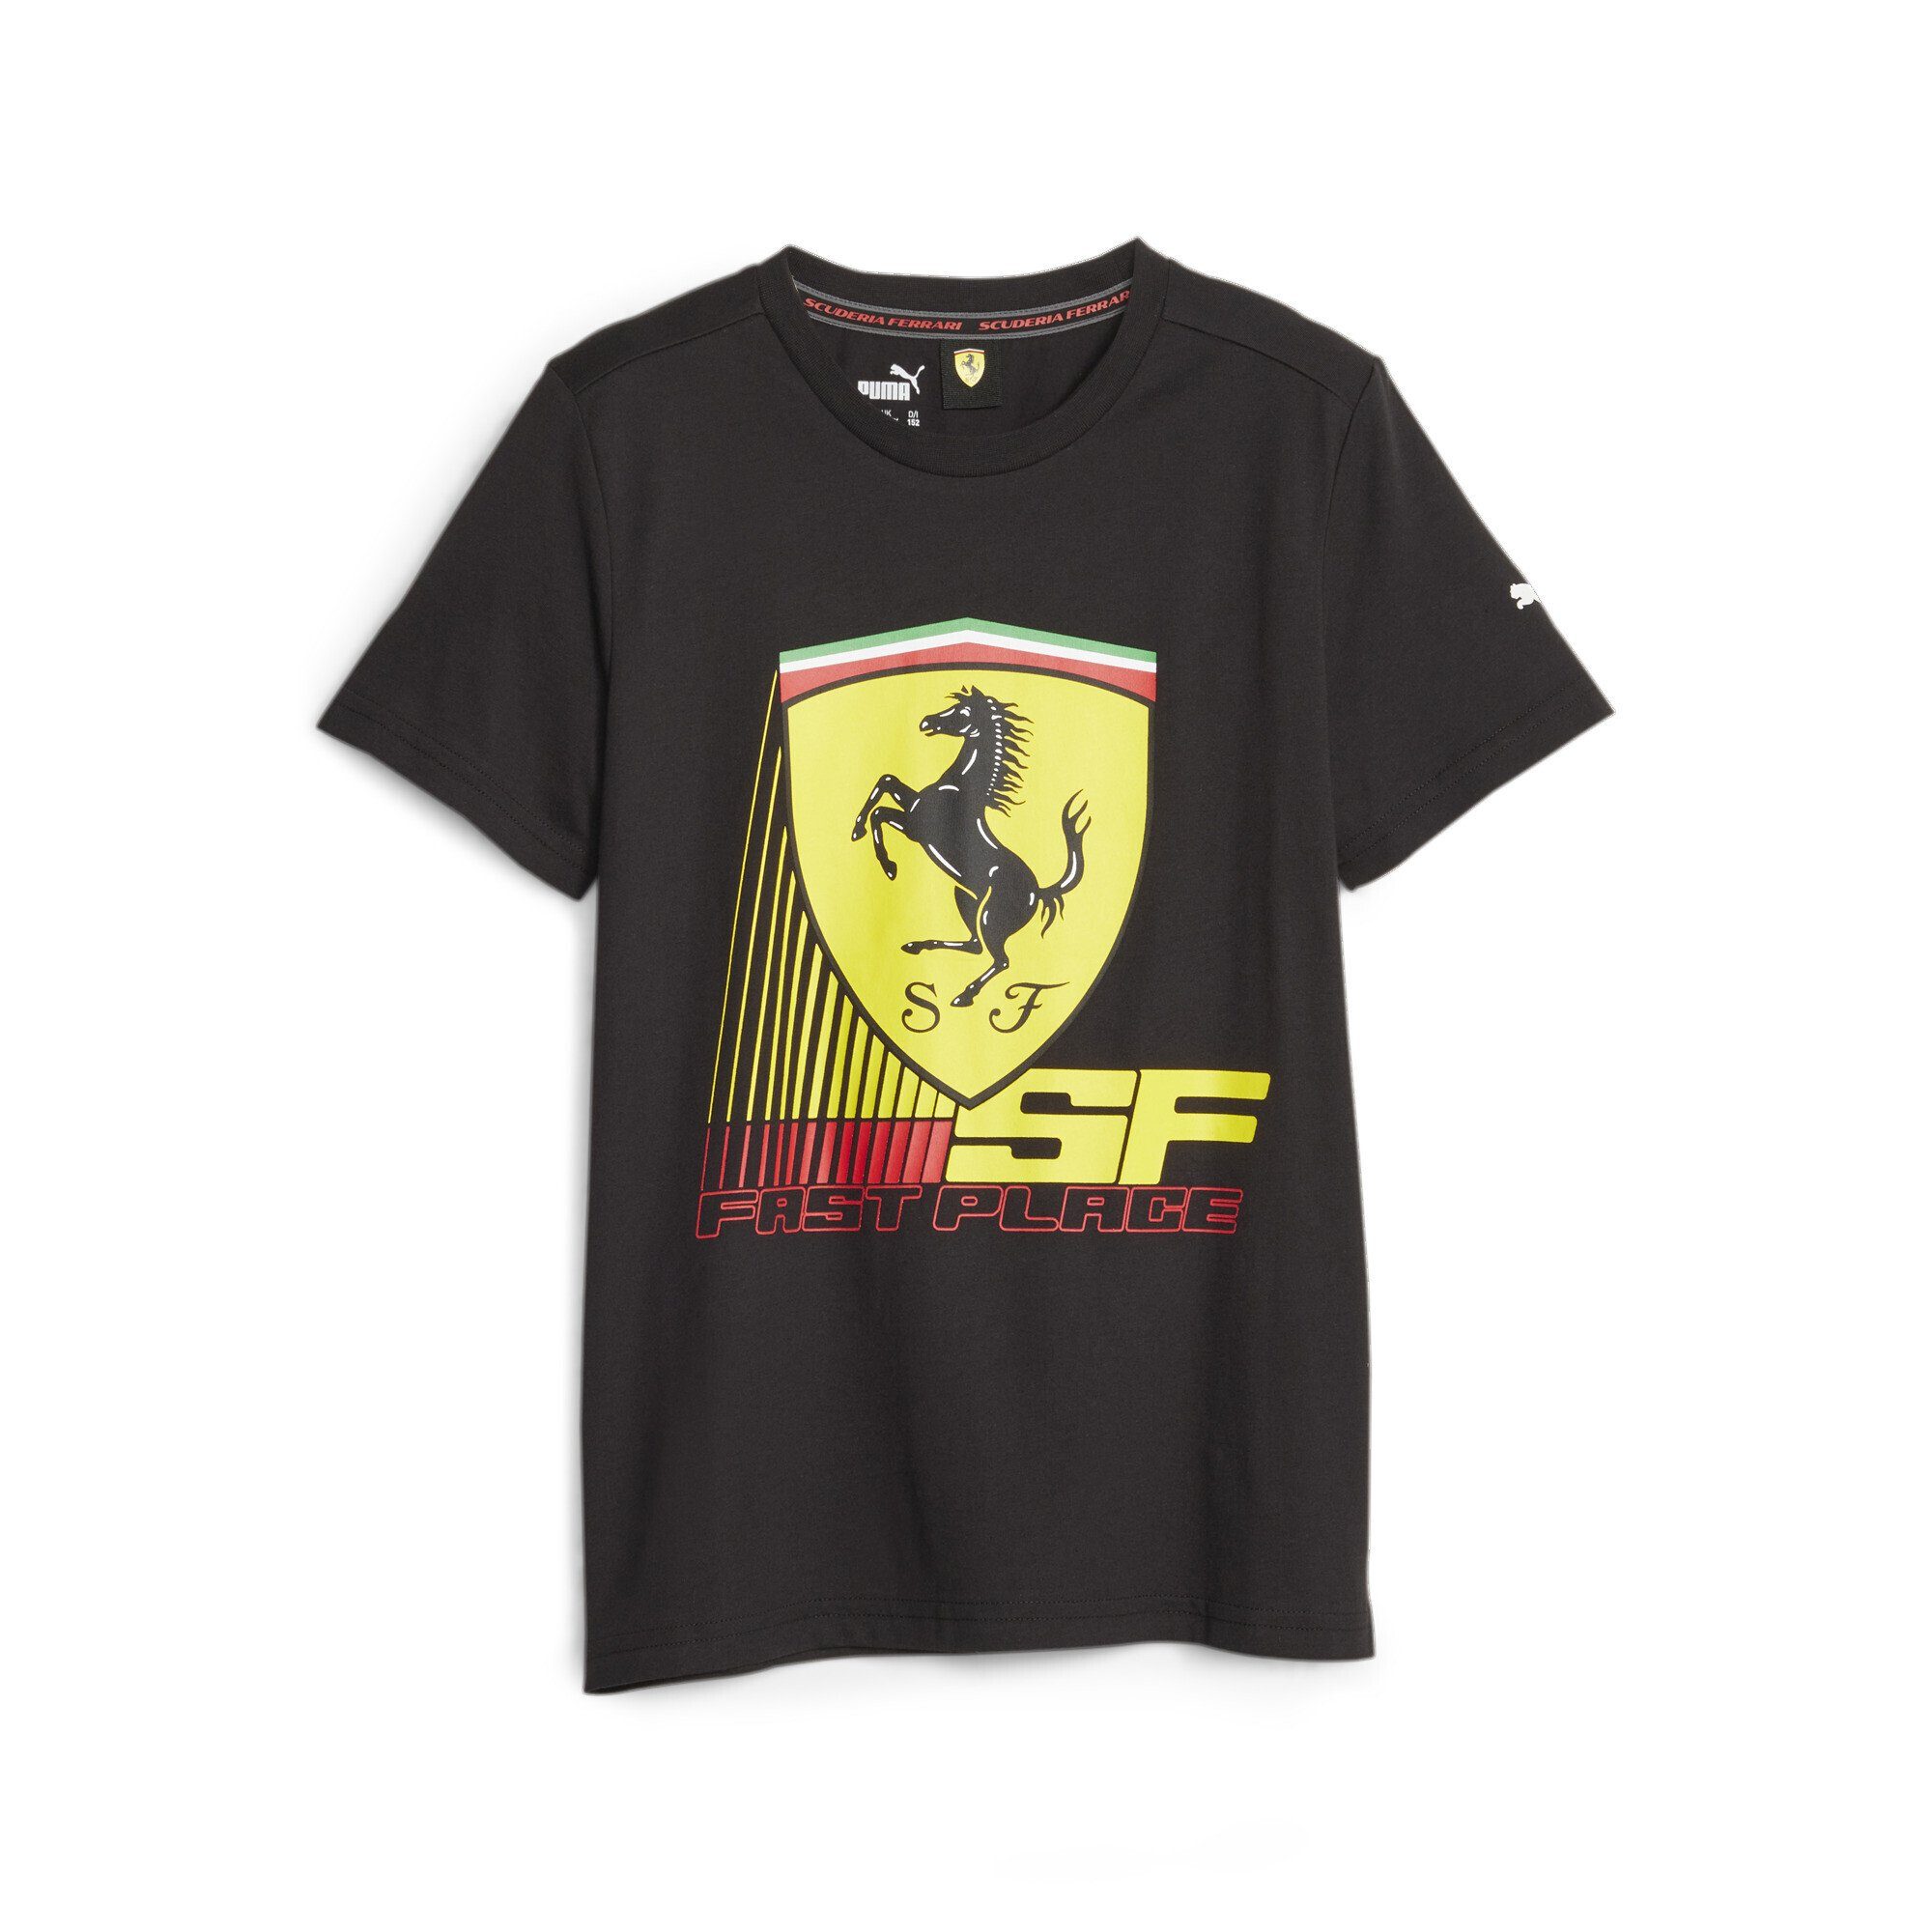 PUMA T-Shirt Scuderia Ferrari Motorsport T-Shirt Jugendliche Black